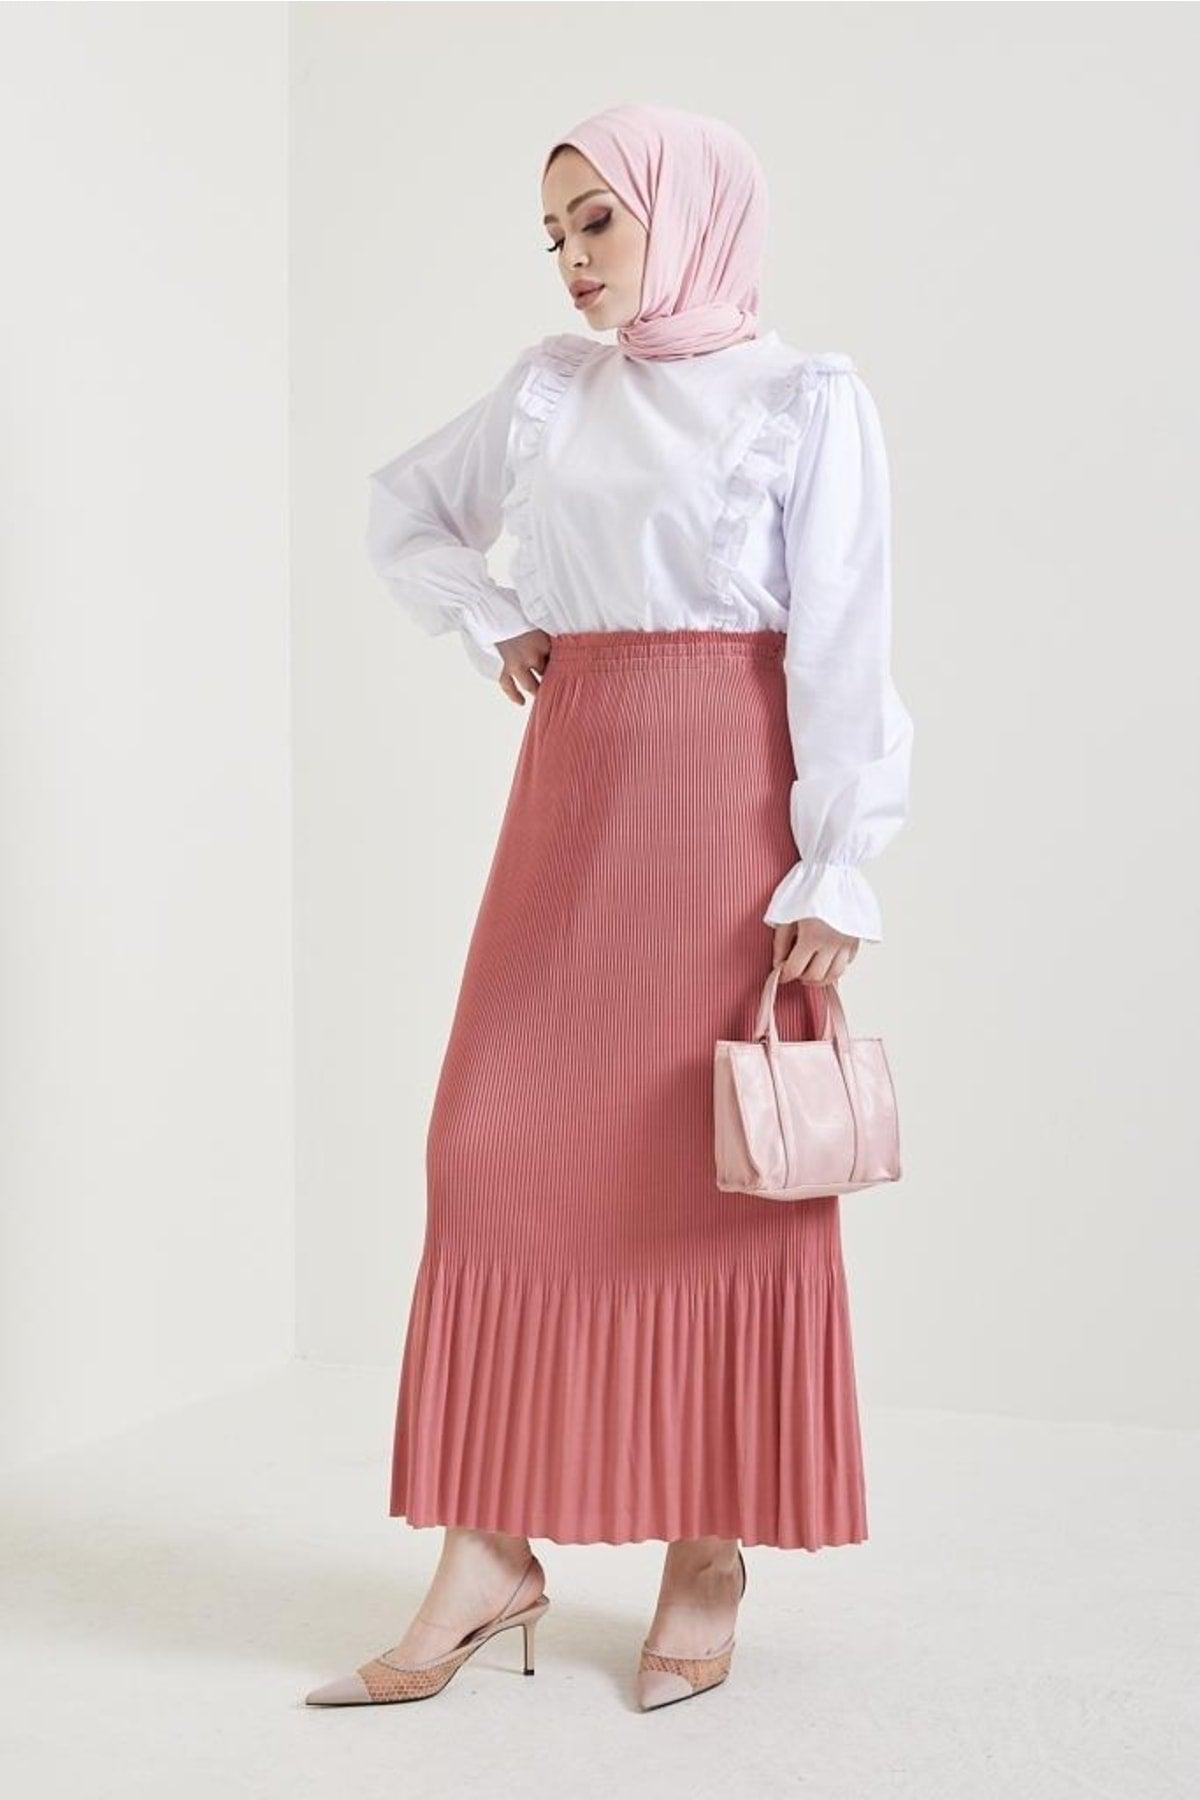 205 - Pi?li?flood? Hijab Skirt Dried Rose - Swordslife